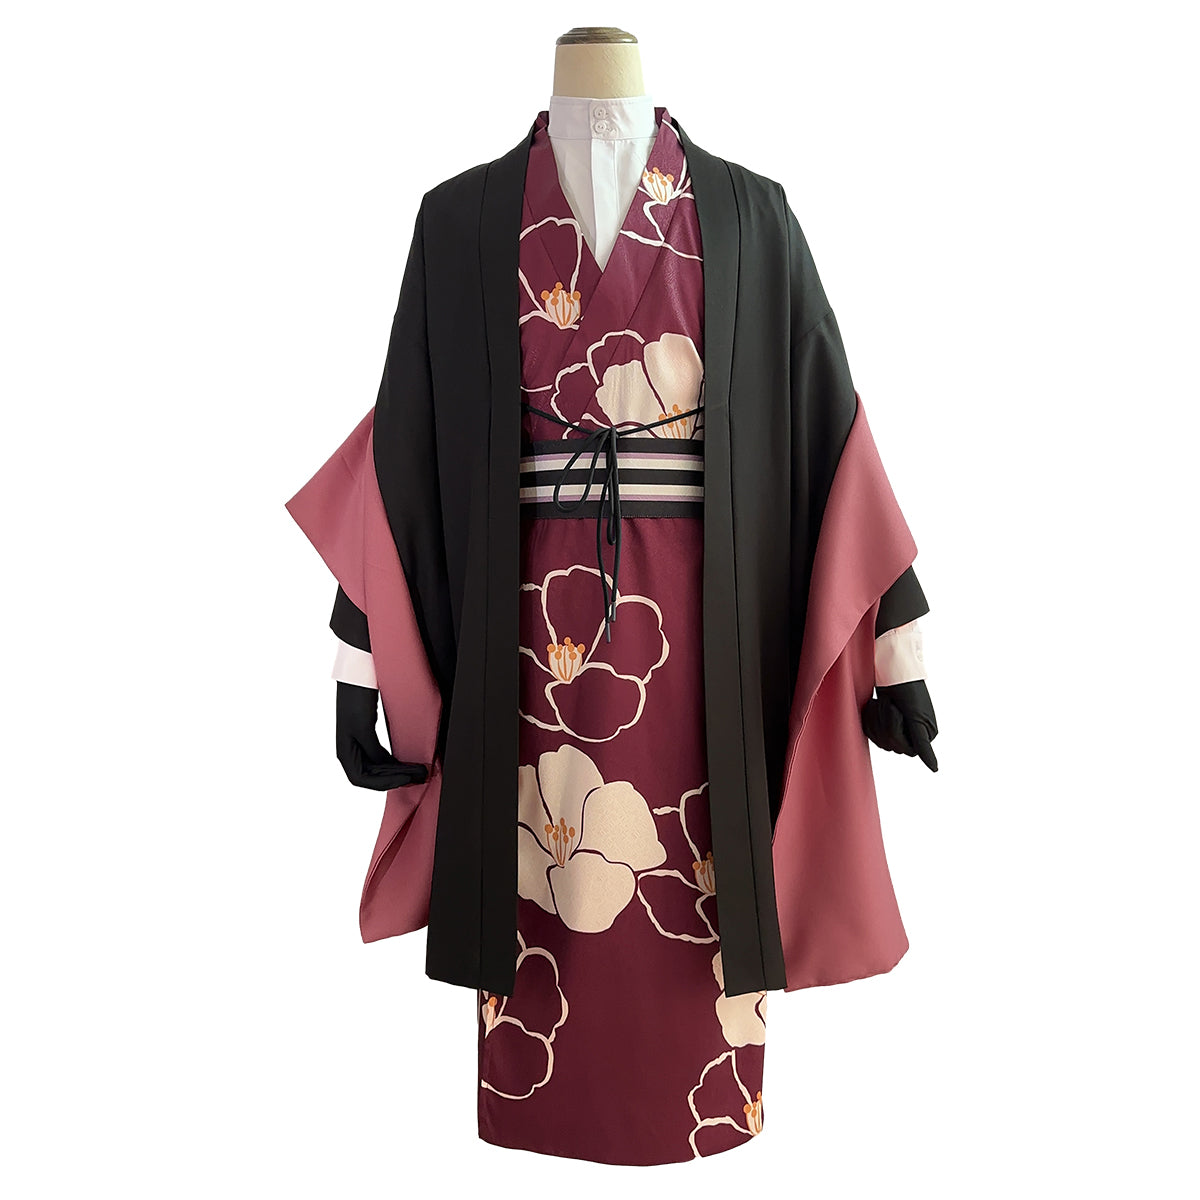 HOLOUN Pre-sale Blue Lock Anime Chigiri Cosplay Costume Wig Kimono Outfit Halloween